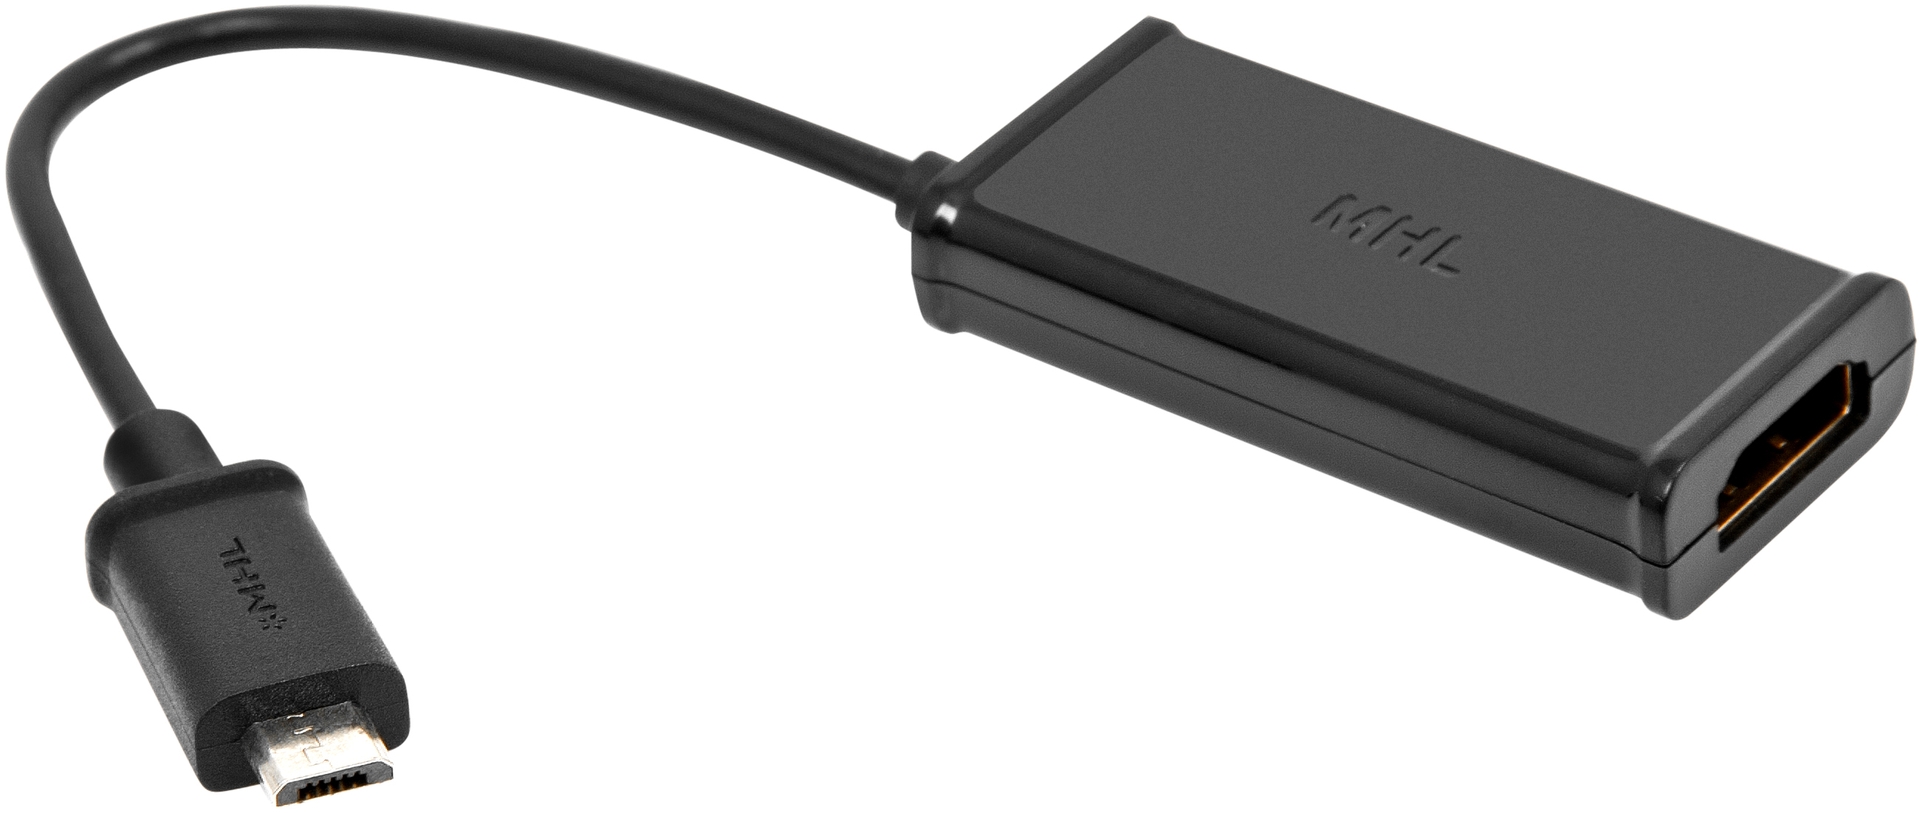 Переходник (кабель - адаптер) с MHL Micro USB на HDMI / VGA